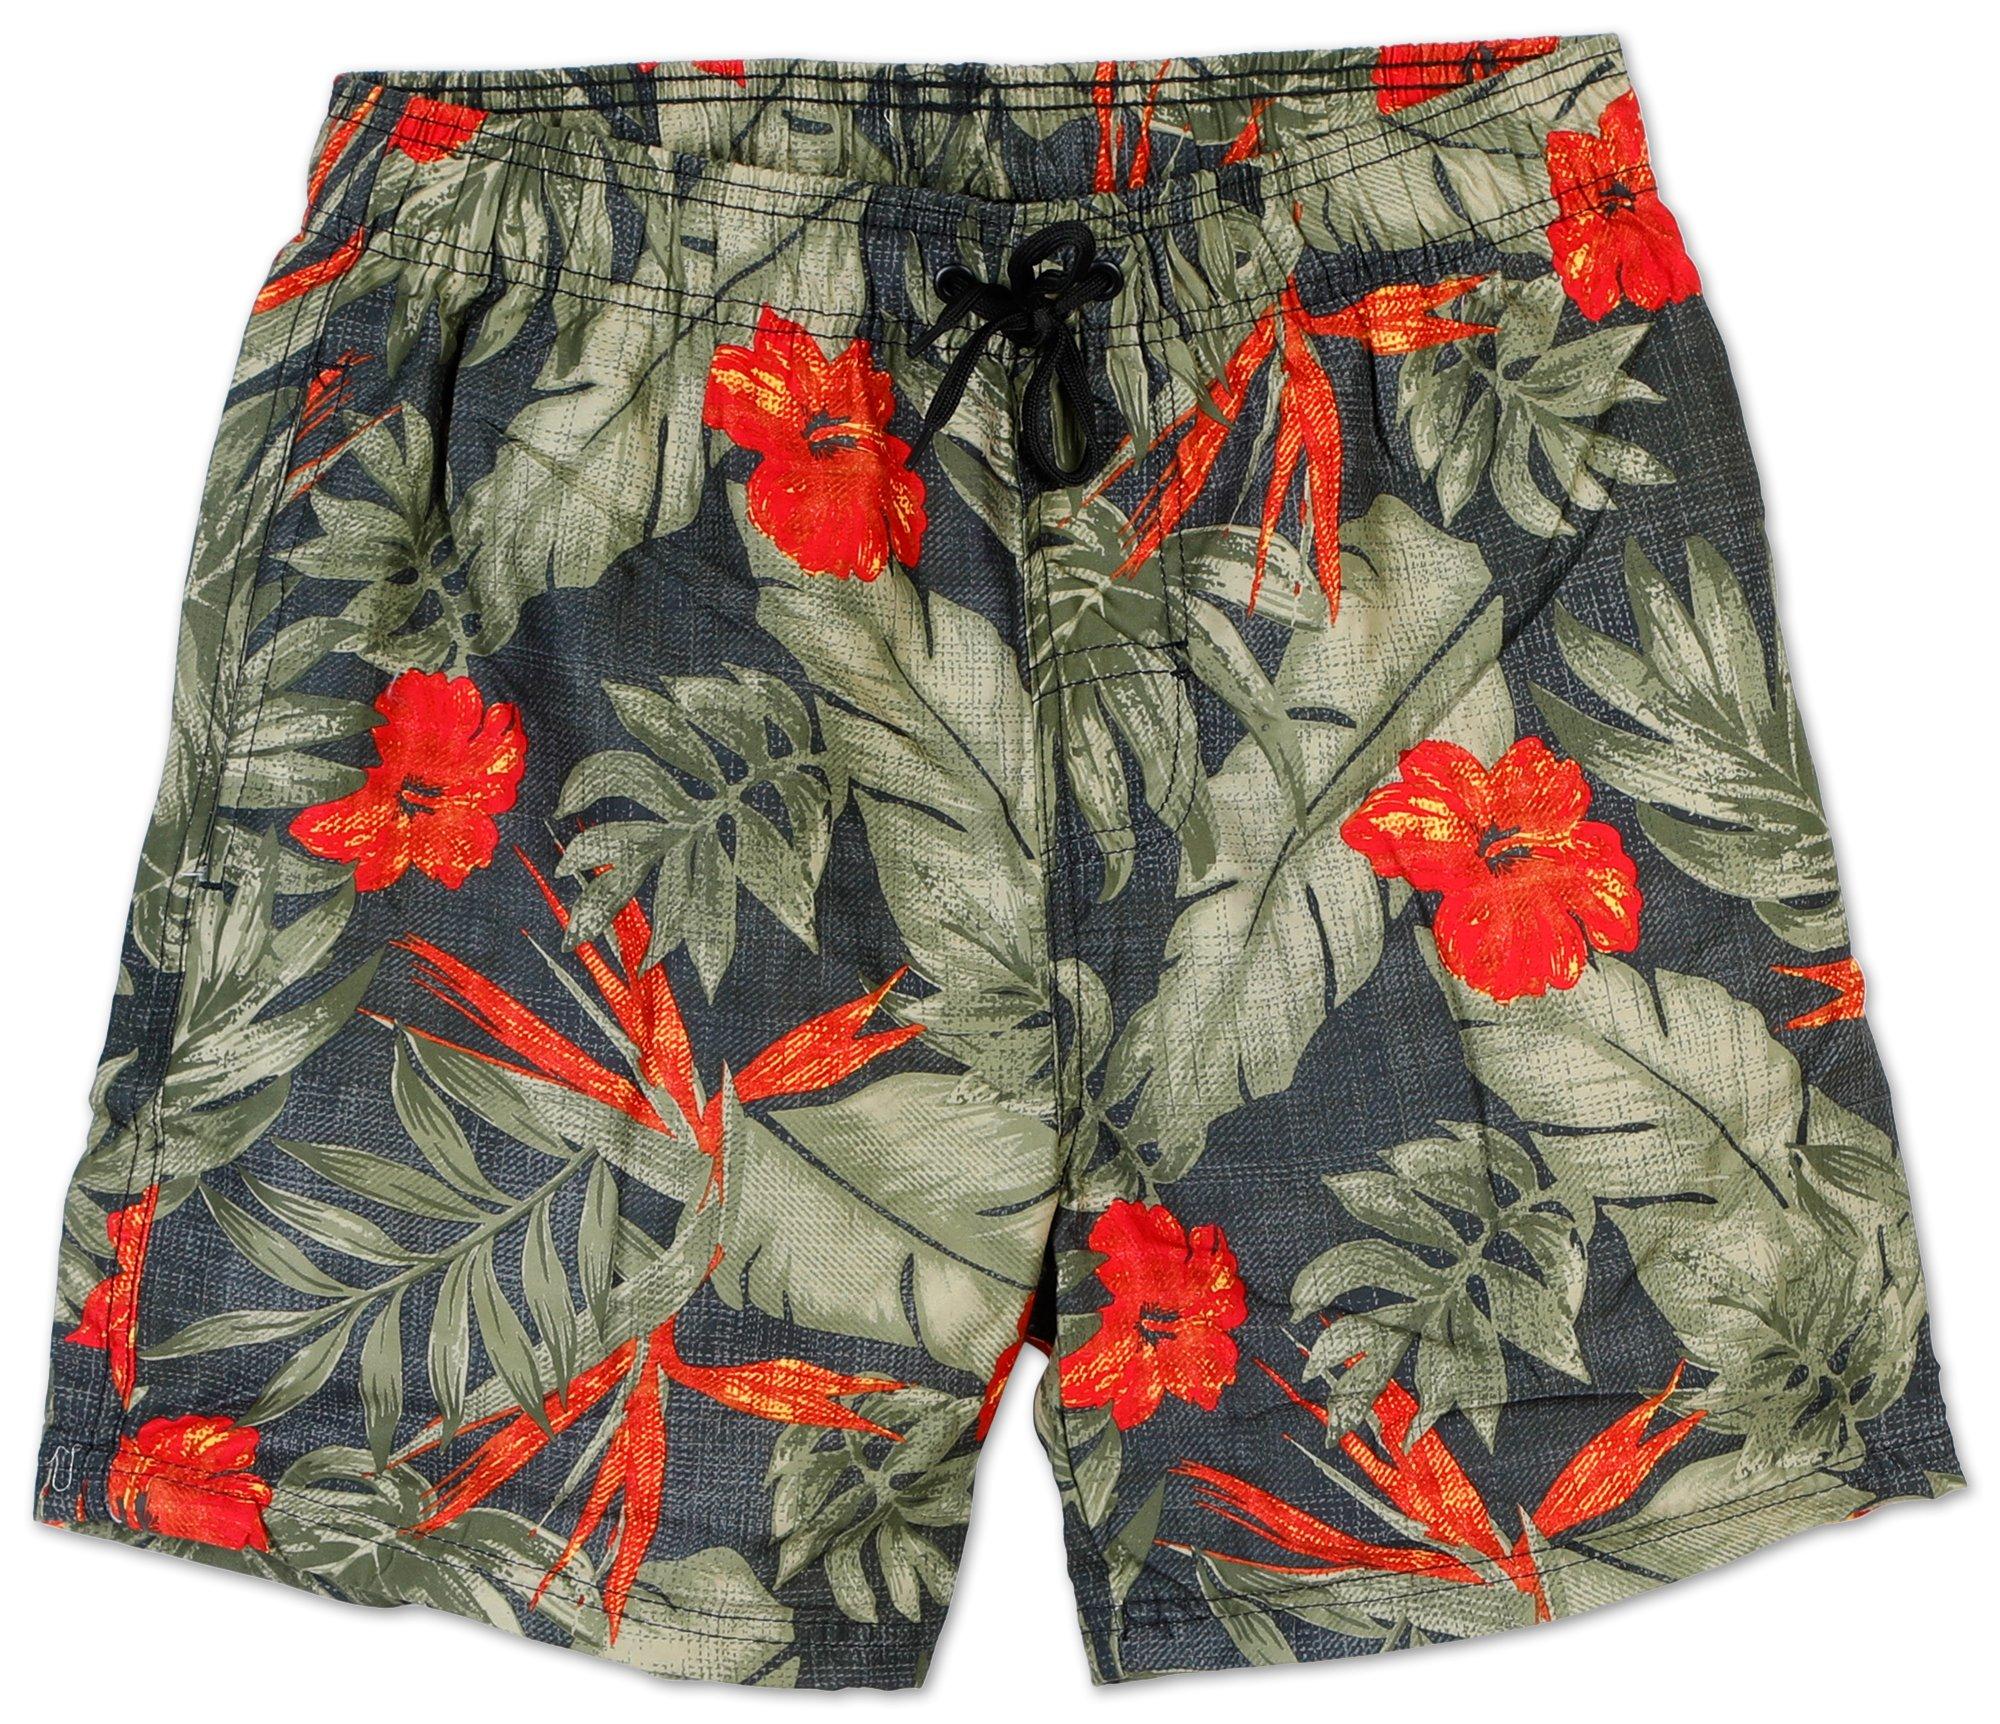 Men's Floral Print Swim Shorts